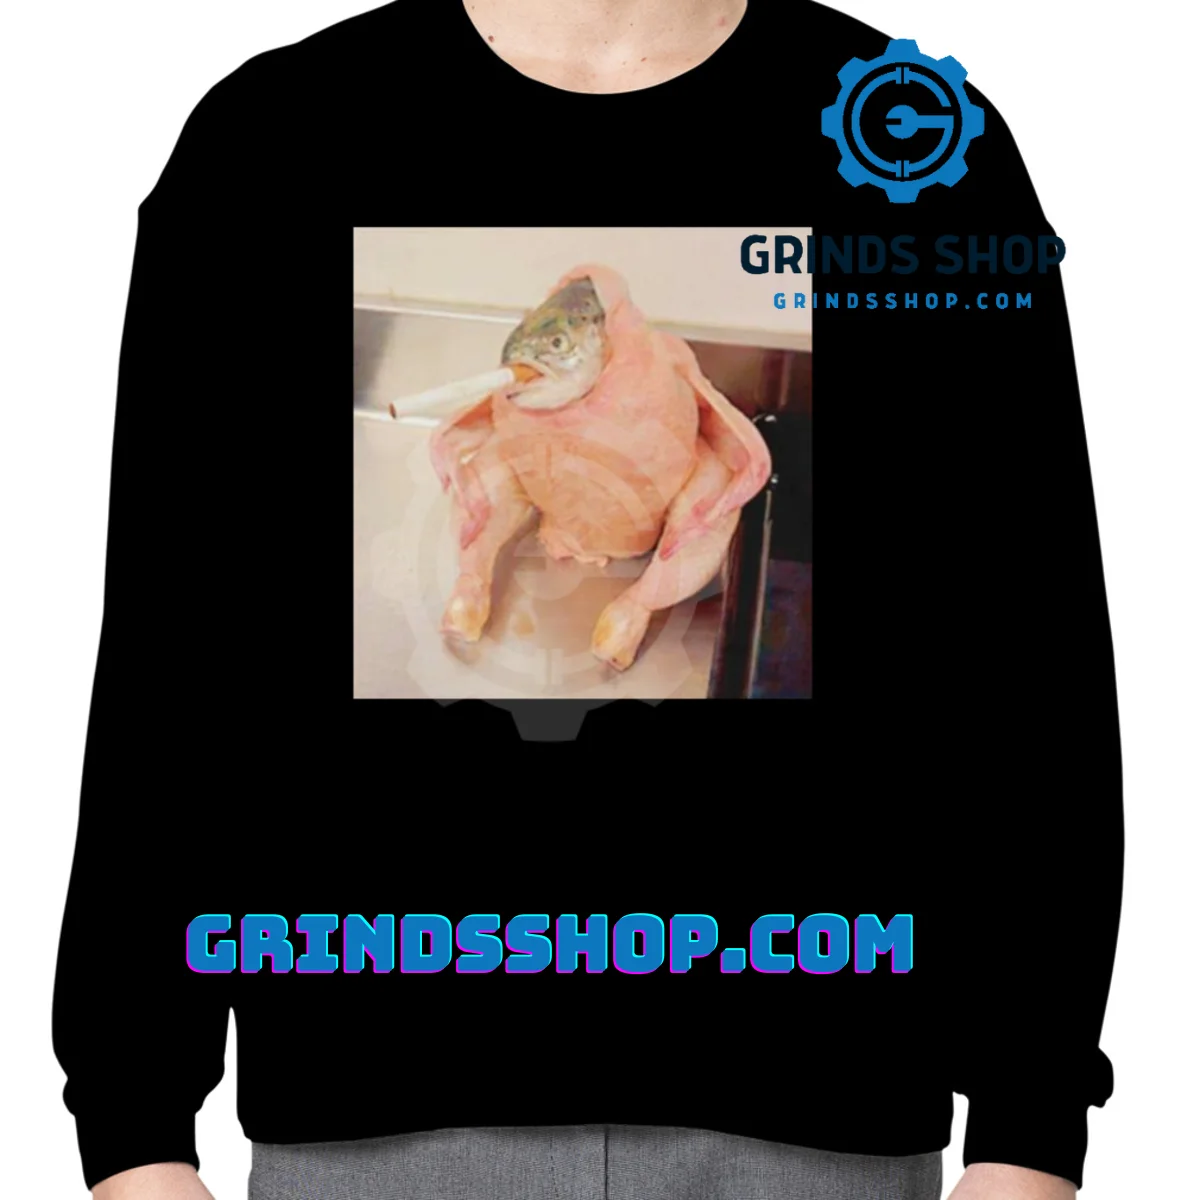 Fish chicken smoking a cigarette meme shirt